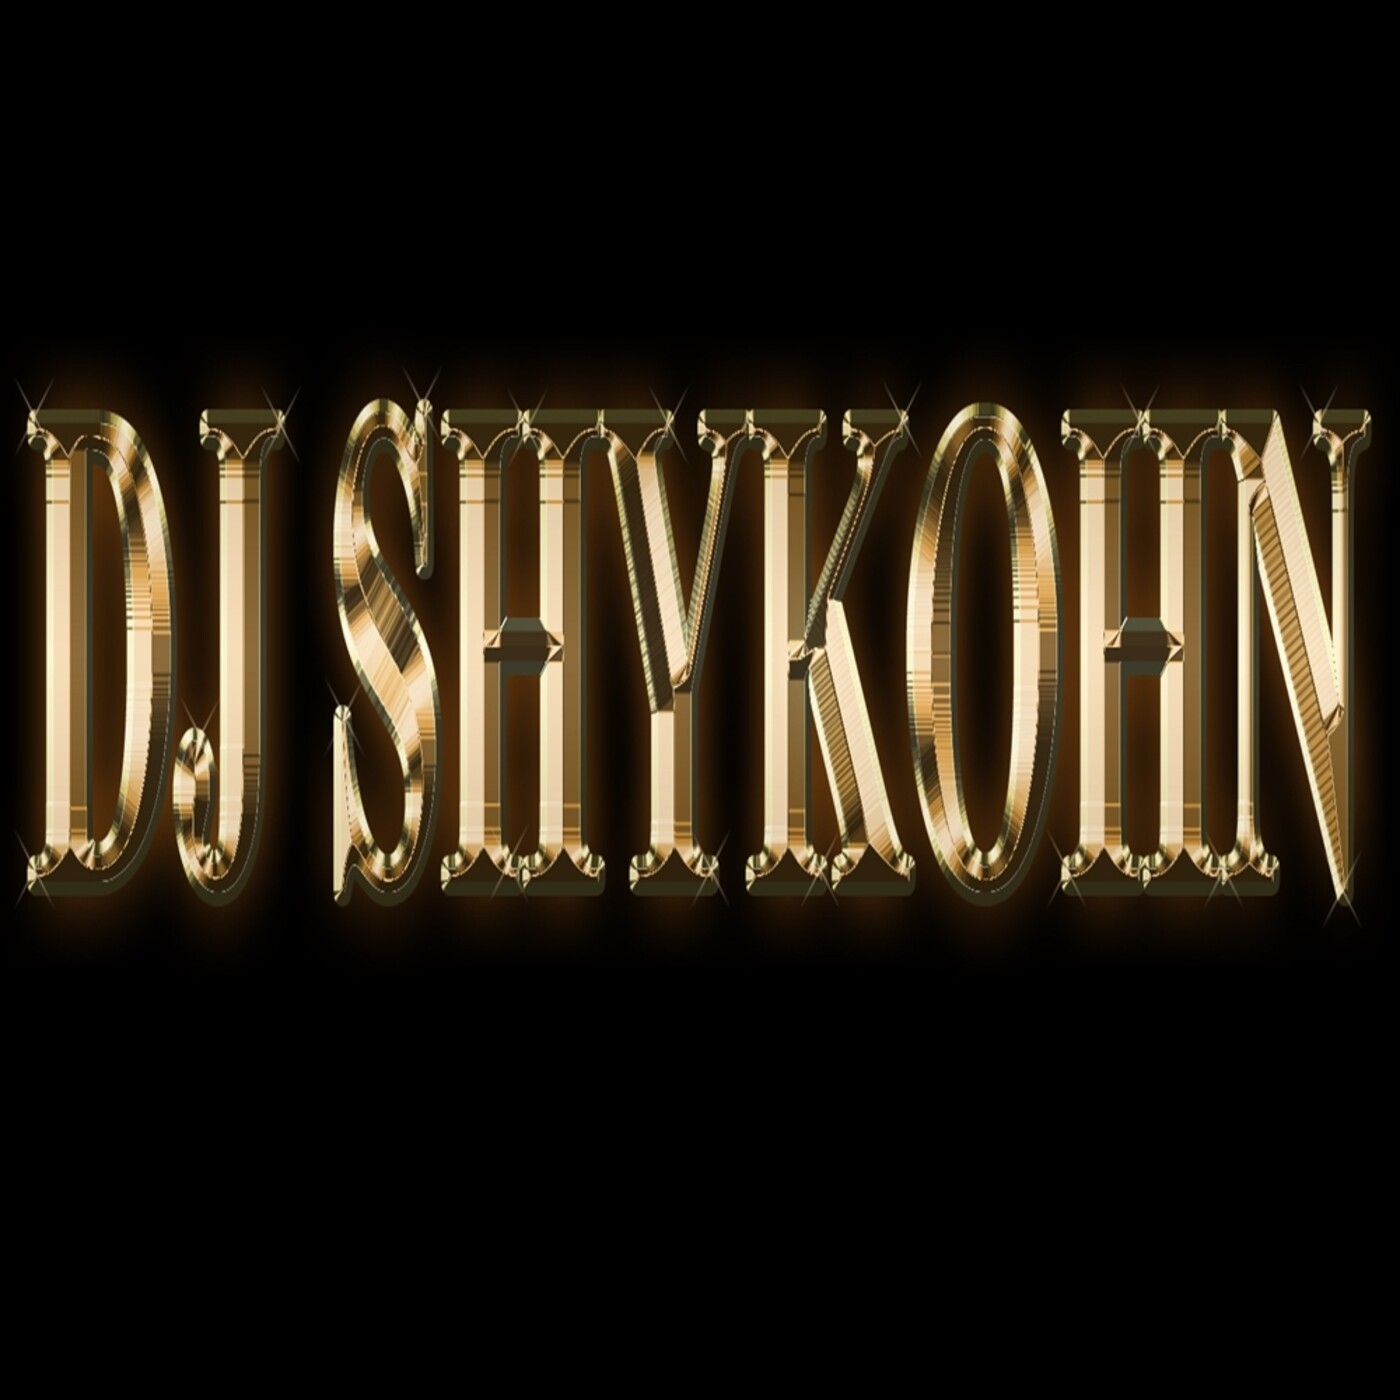 Electro remix 2 - dj shykohn